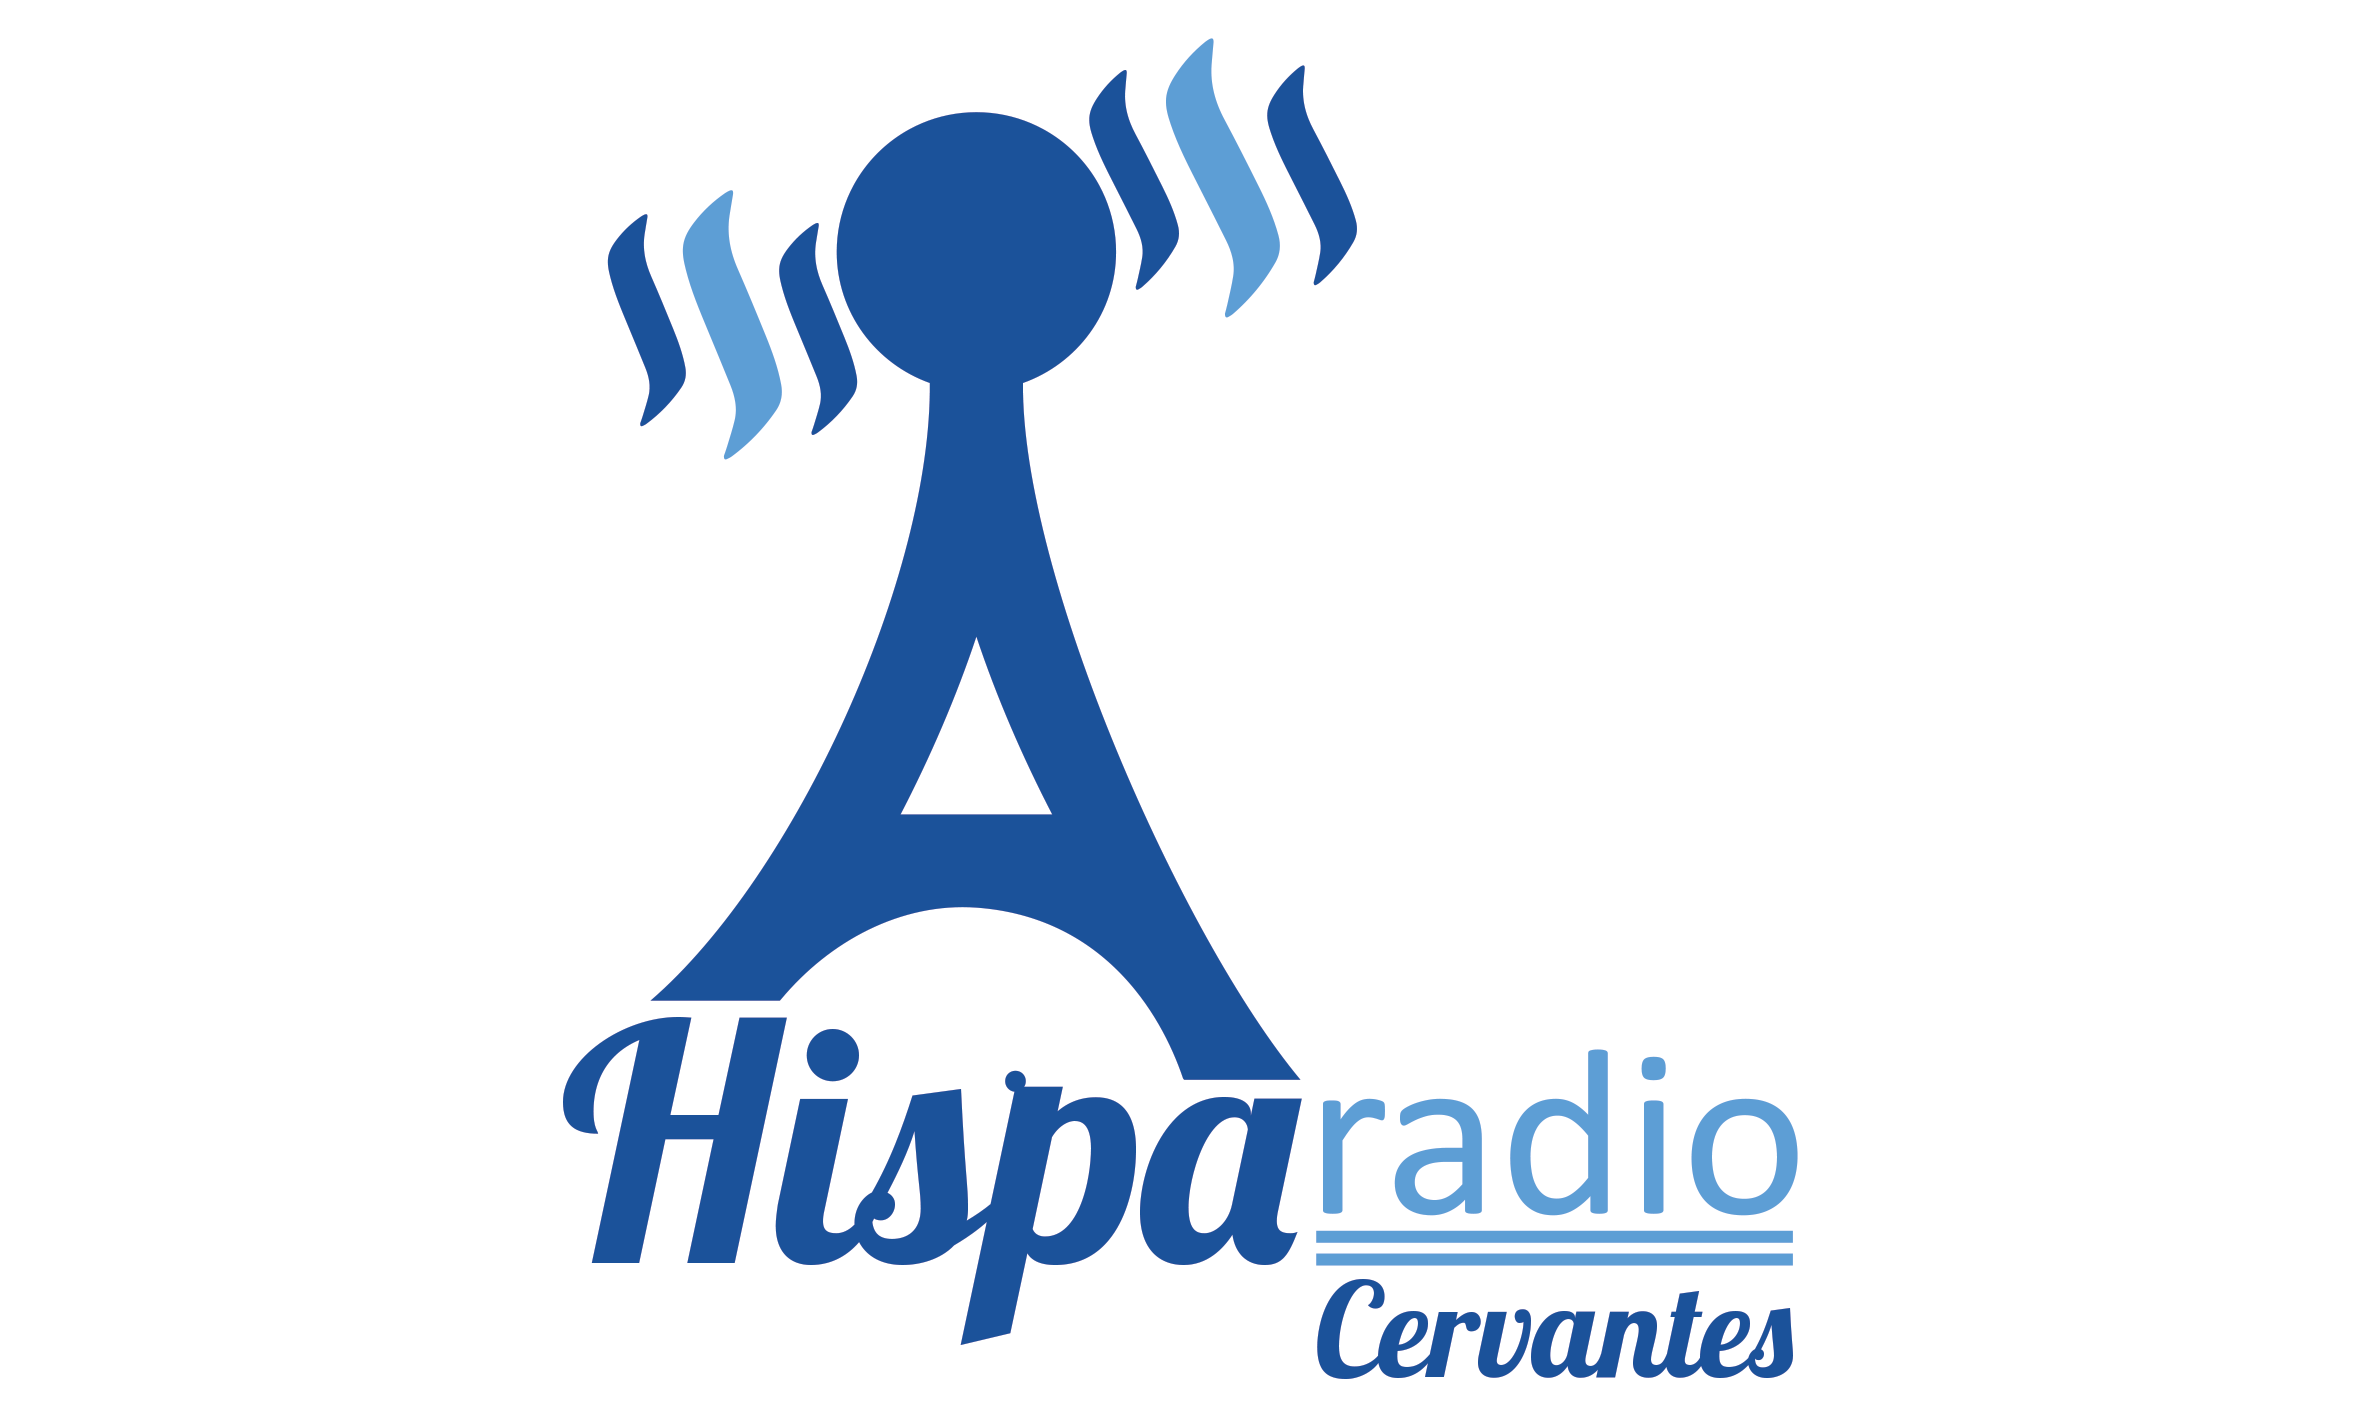 Logo-Hisparadio.png